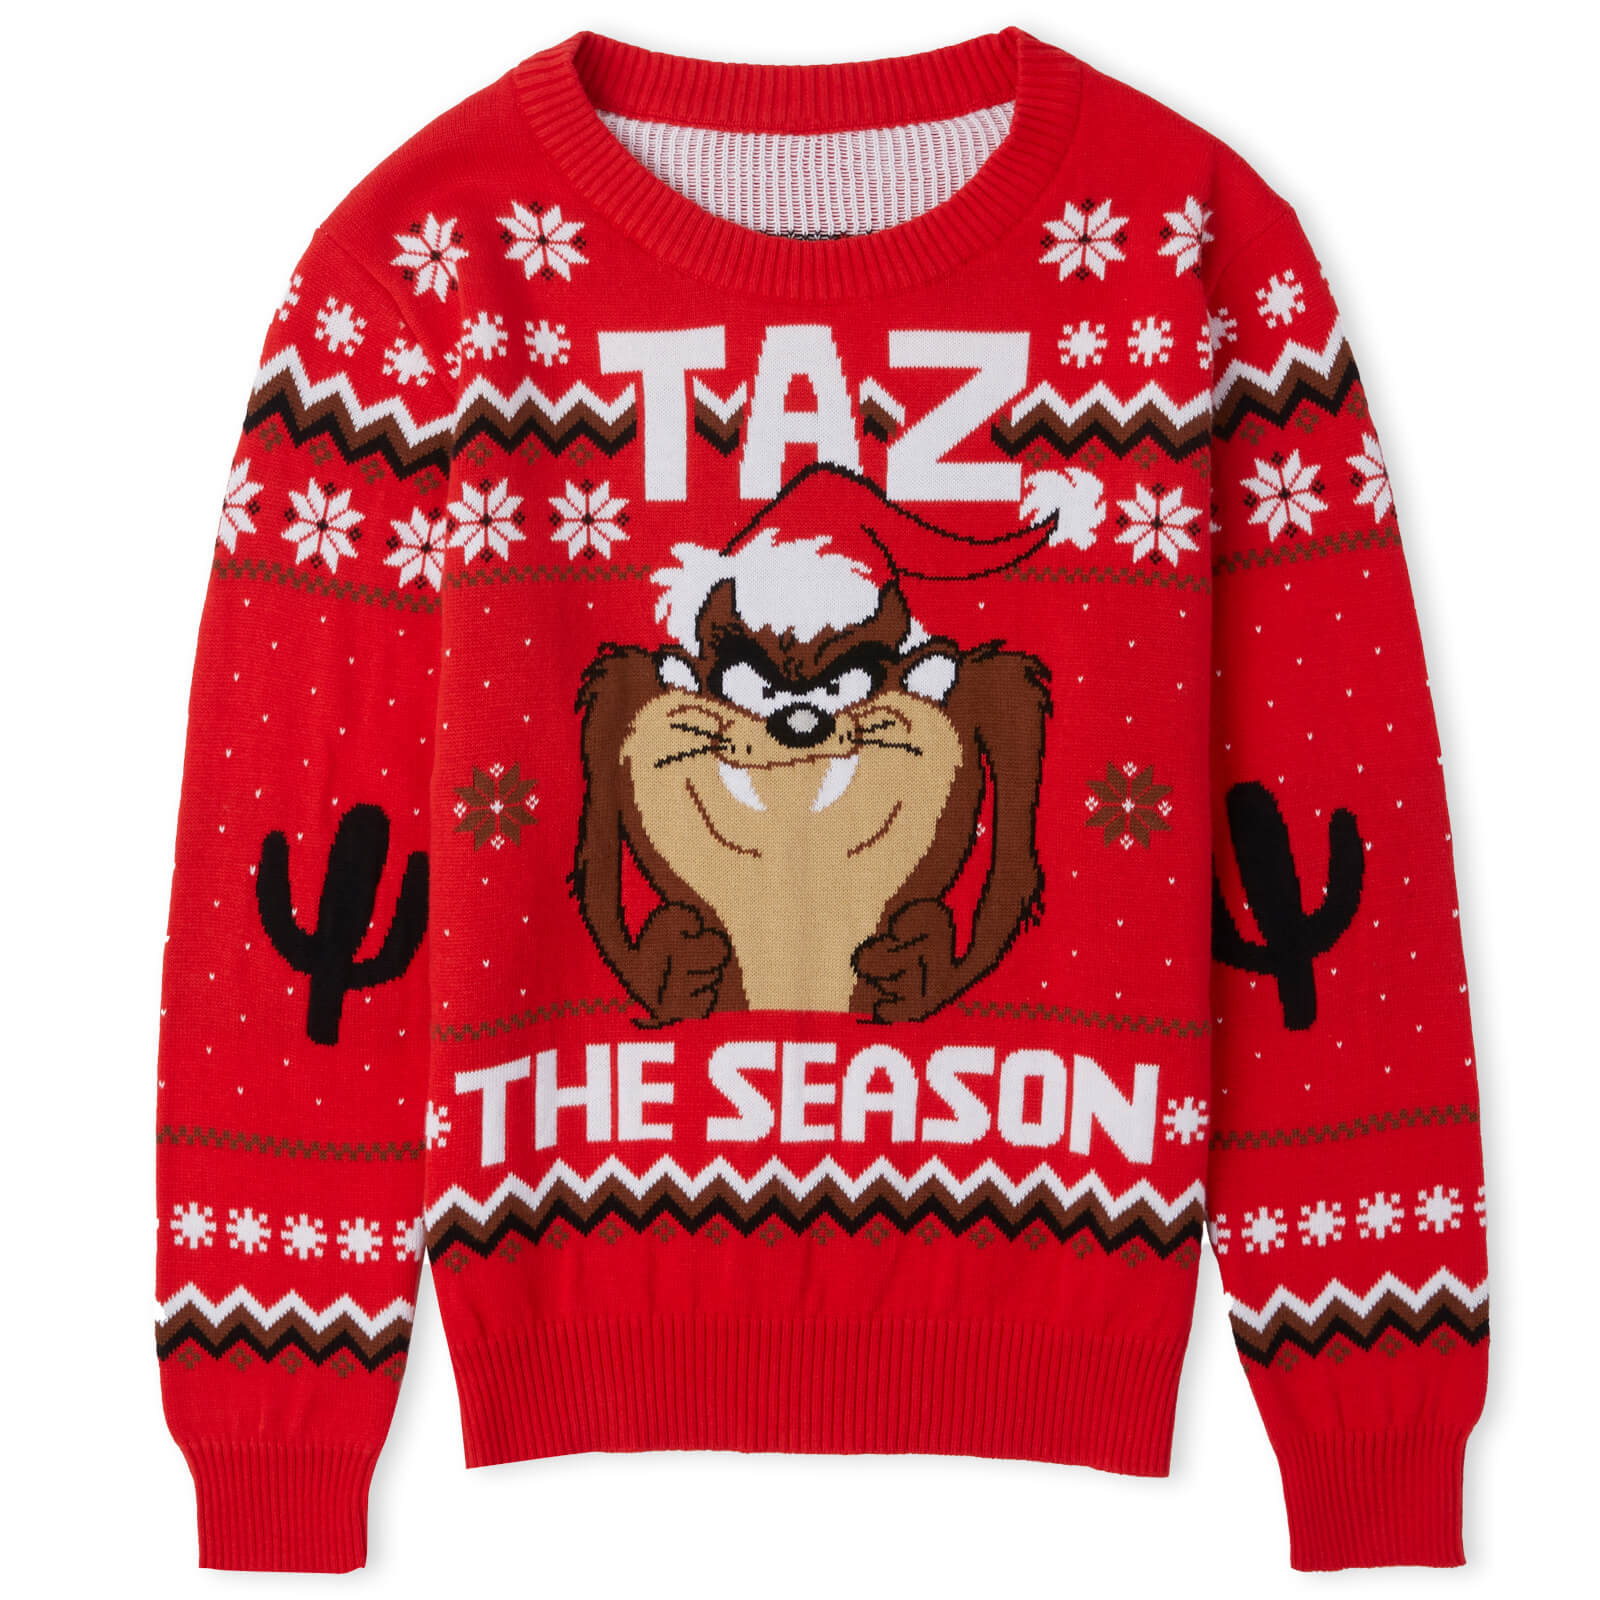 Taz the Season Christmas Kids Knitted Jumper Red - S